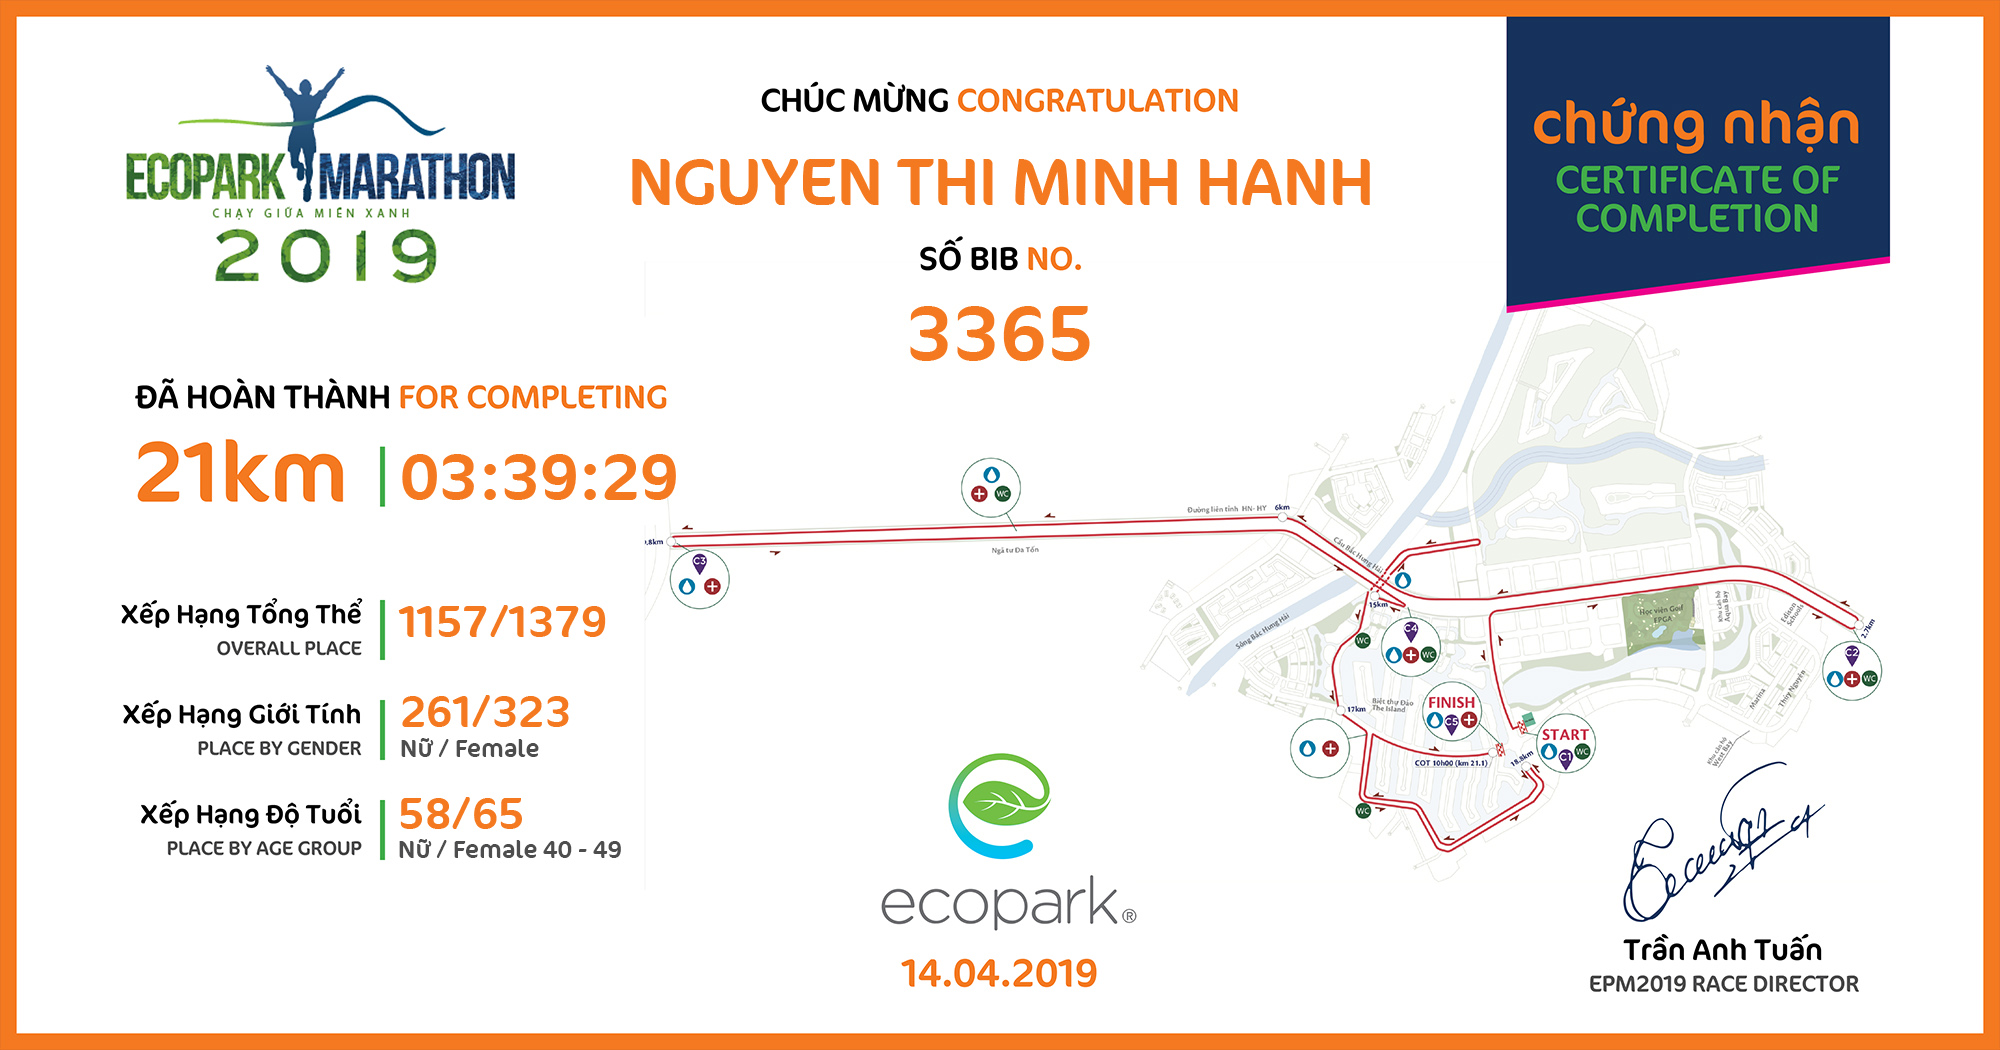 3365 - Nguyen Thi Minh Hanh